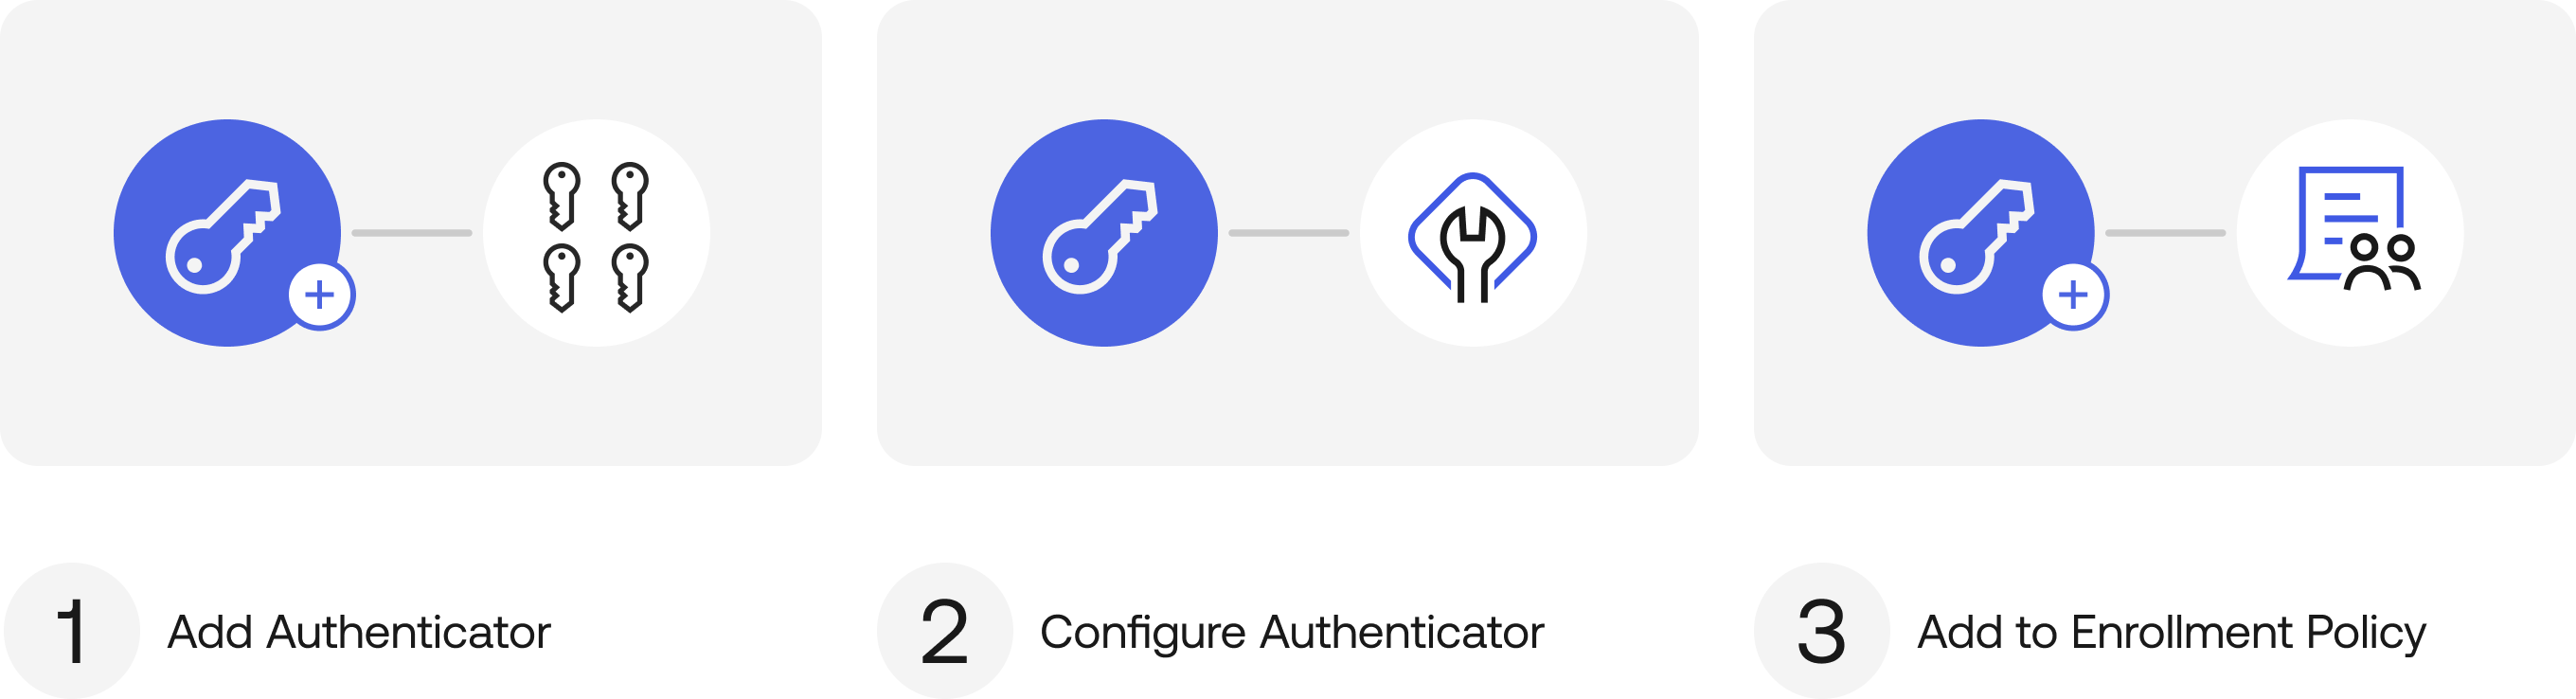 Adding an authenticator